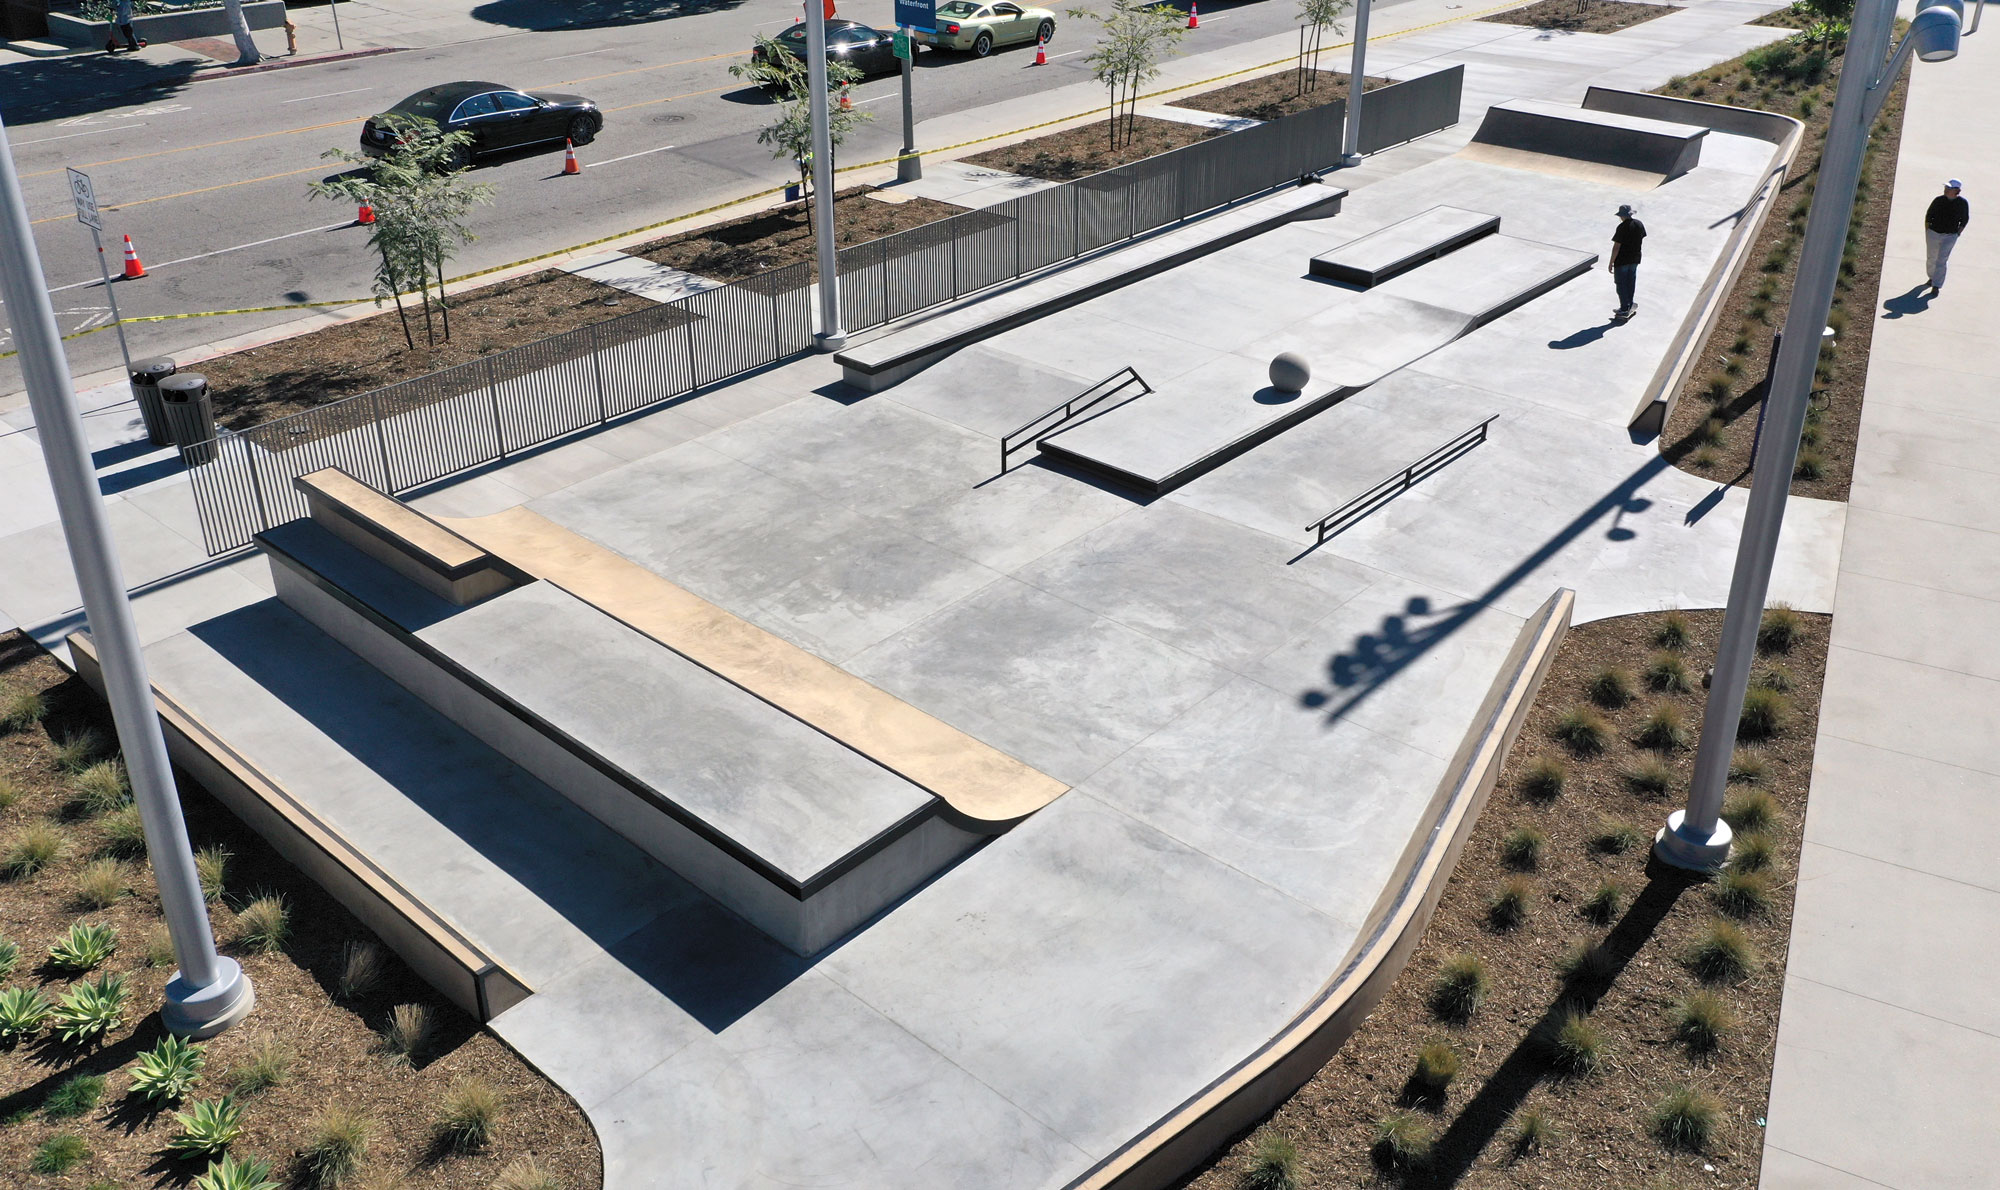 Lincoln Park Skate Spot in Downtown Long Beach